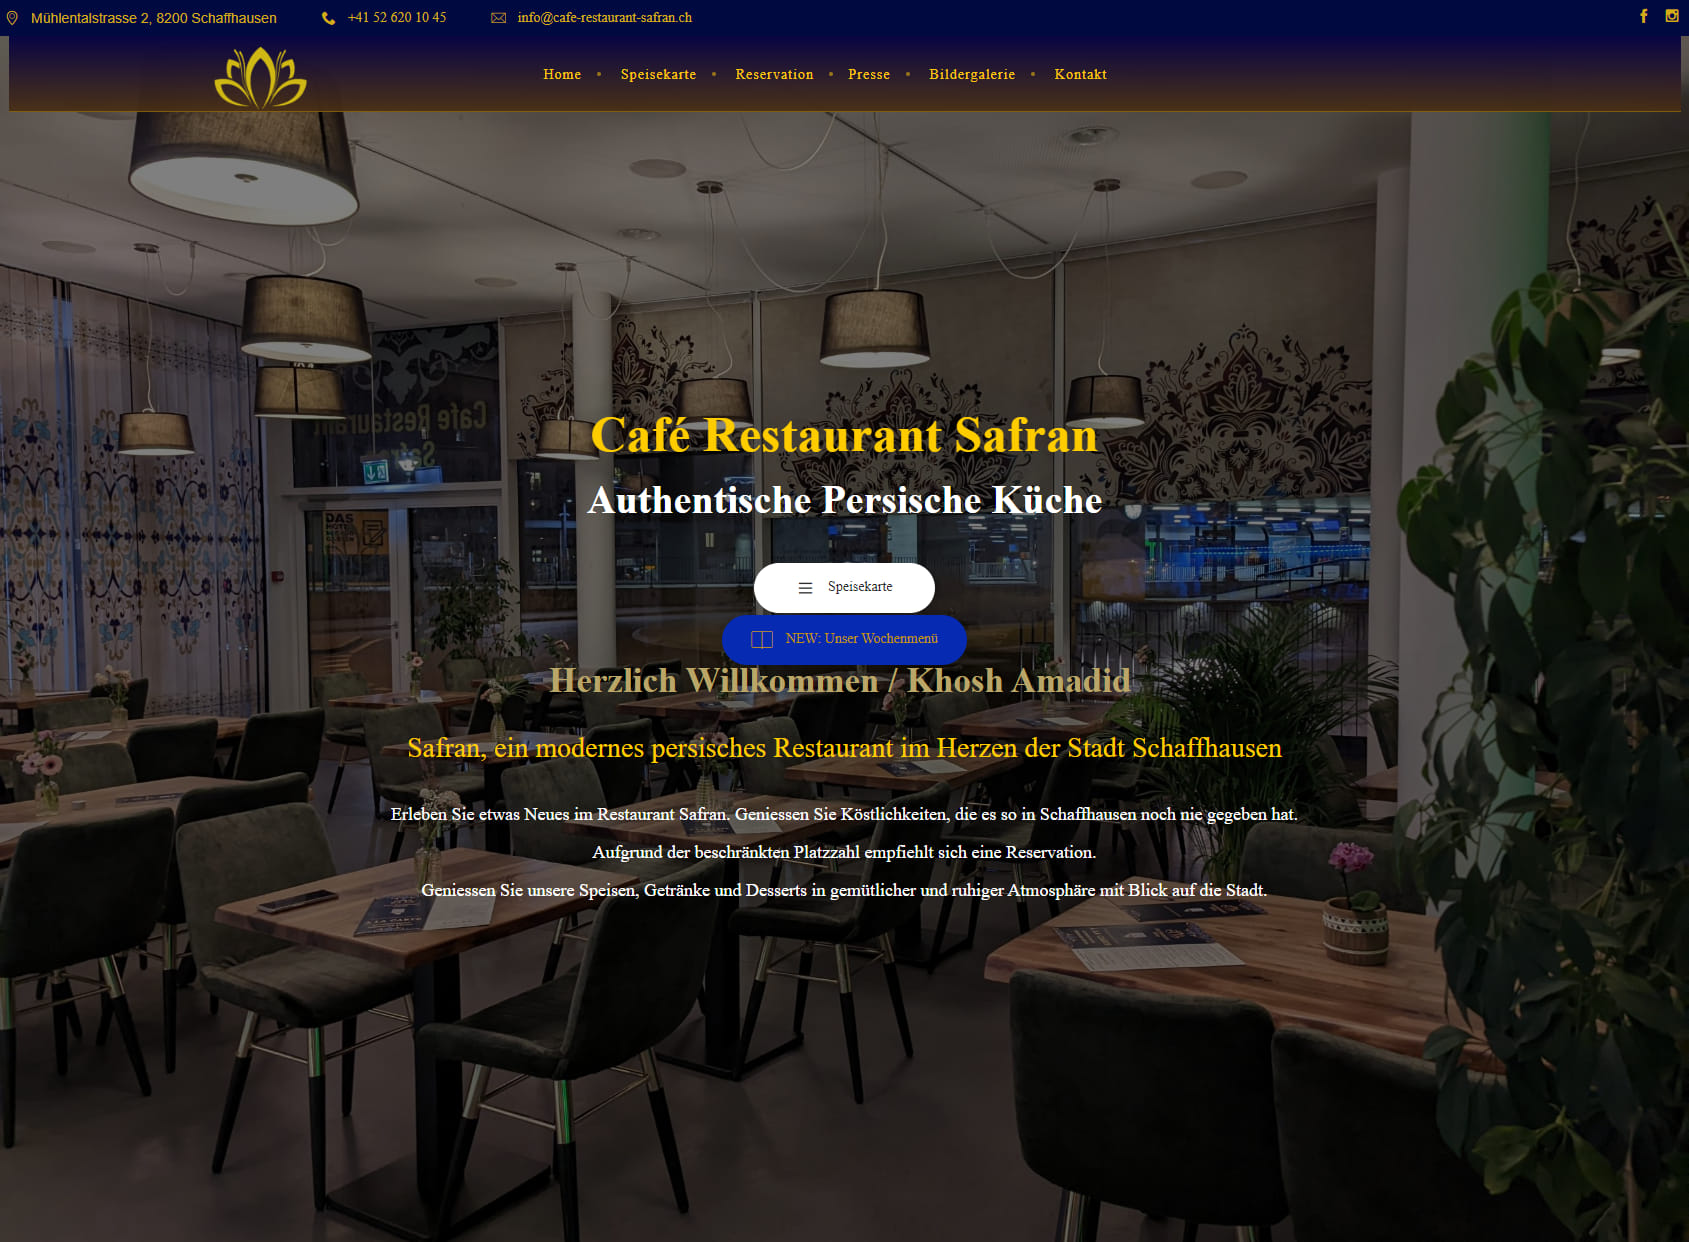 Café Restaurant Safran